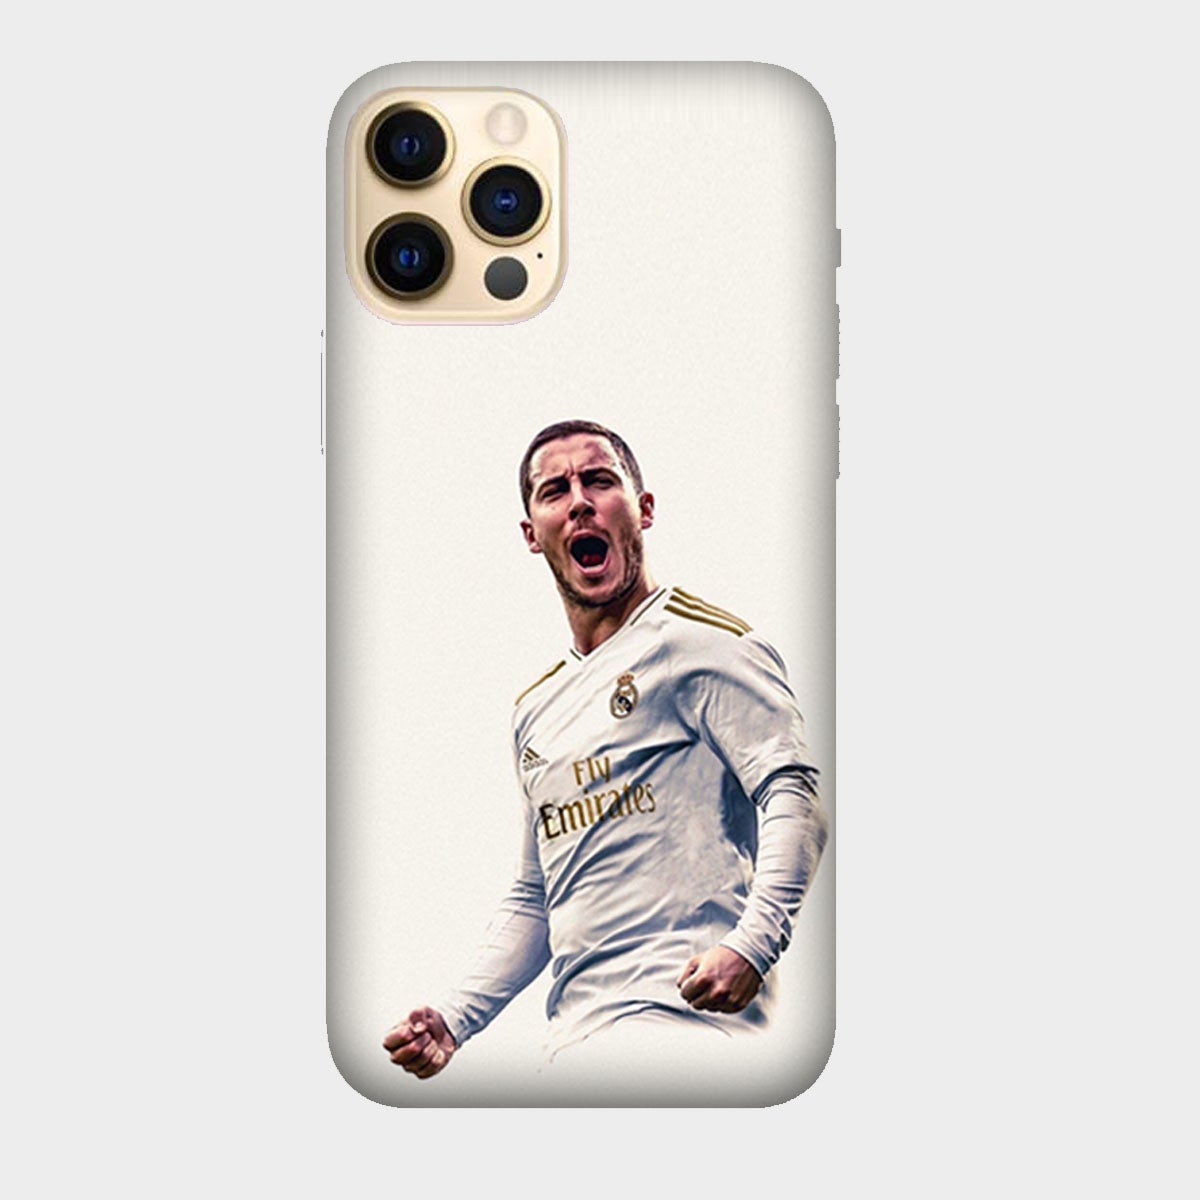 Eden Hazard - Real Madrid - Mobile Phone Cover - Hard Case